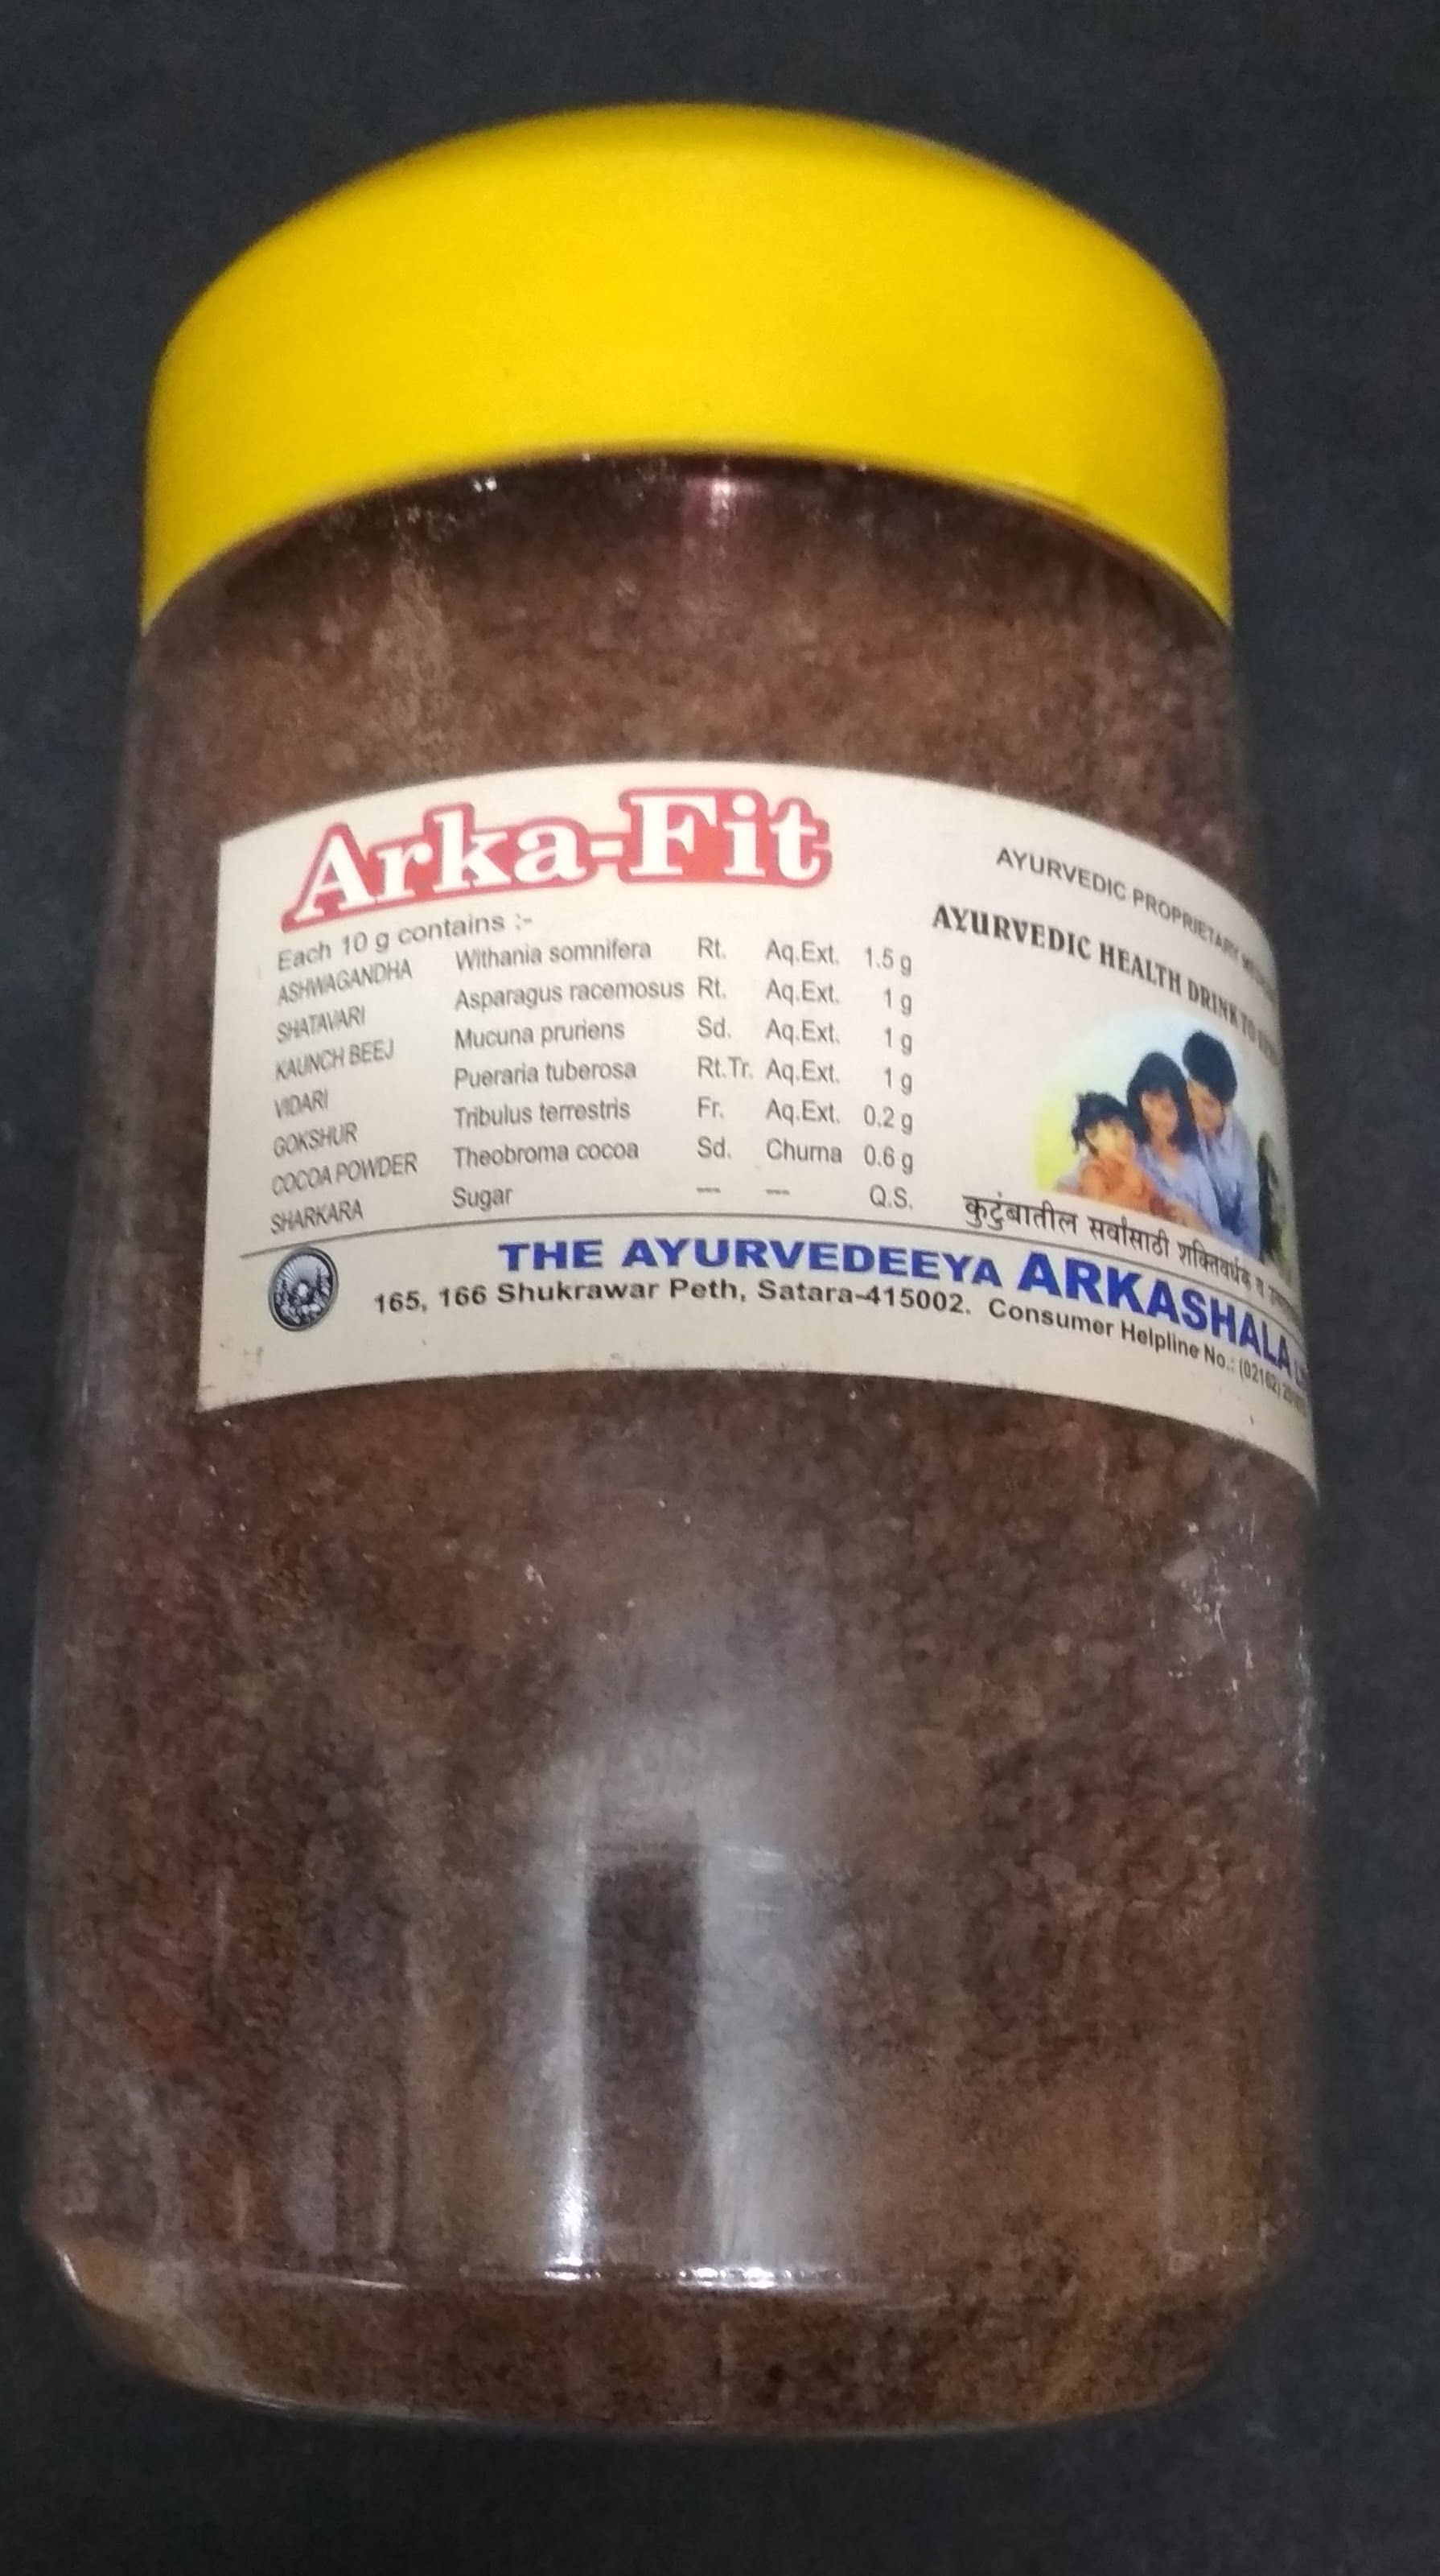 arkafit 1 kg upto 15% off The Ayurveda Arkashala